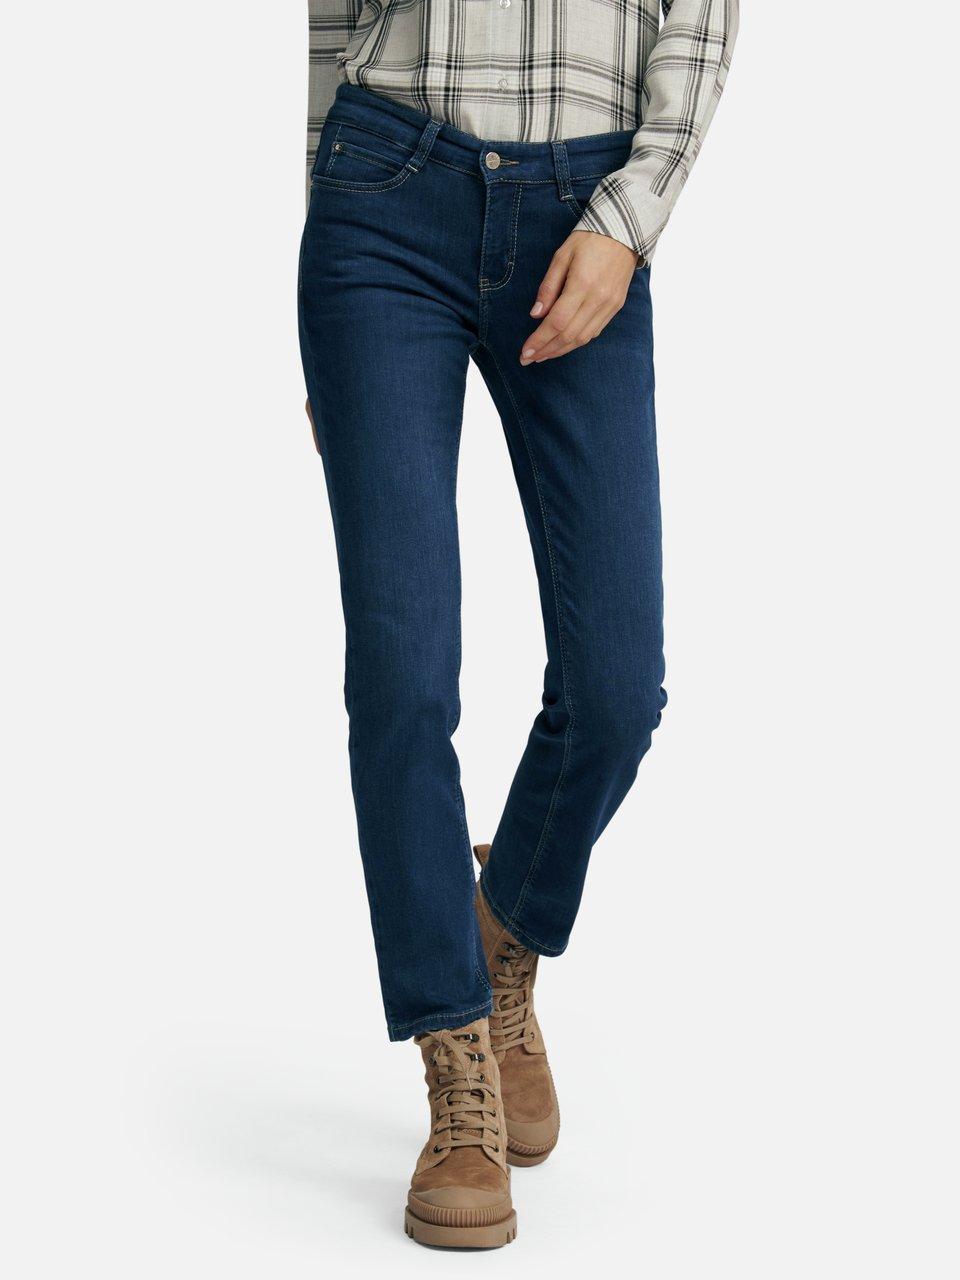 Mac - Le jean avec jambes droi­tes